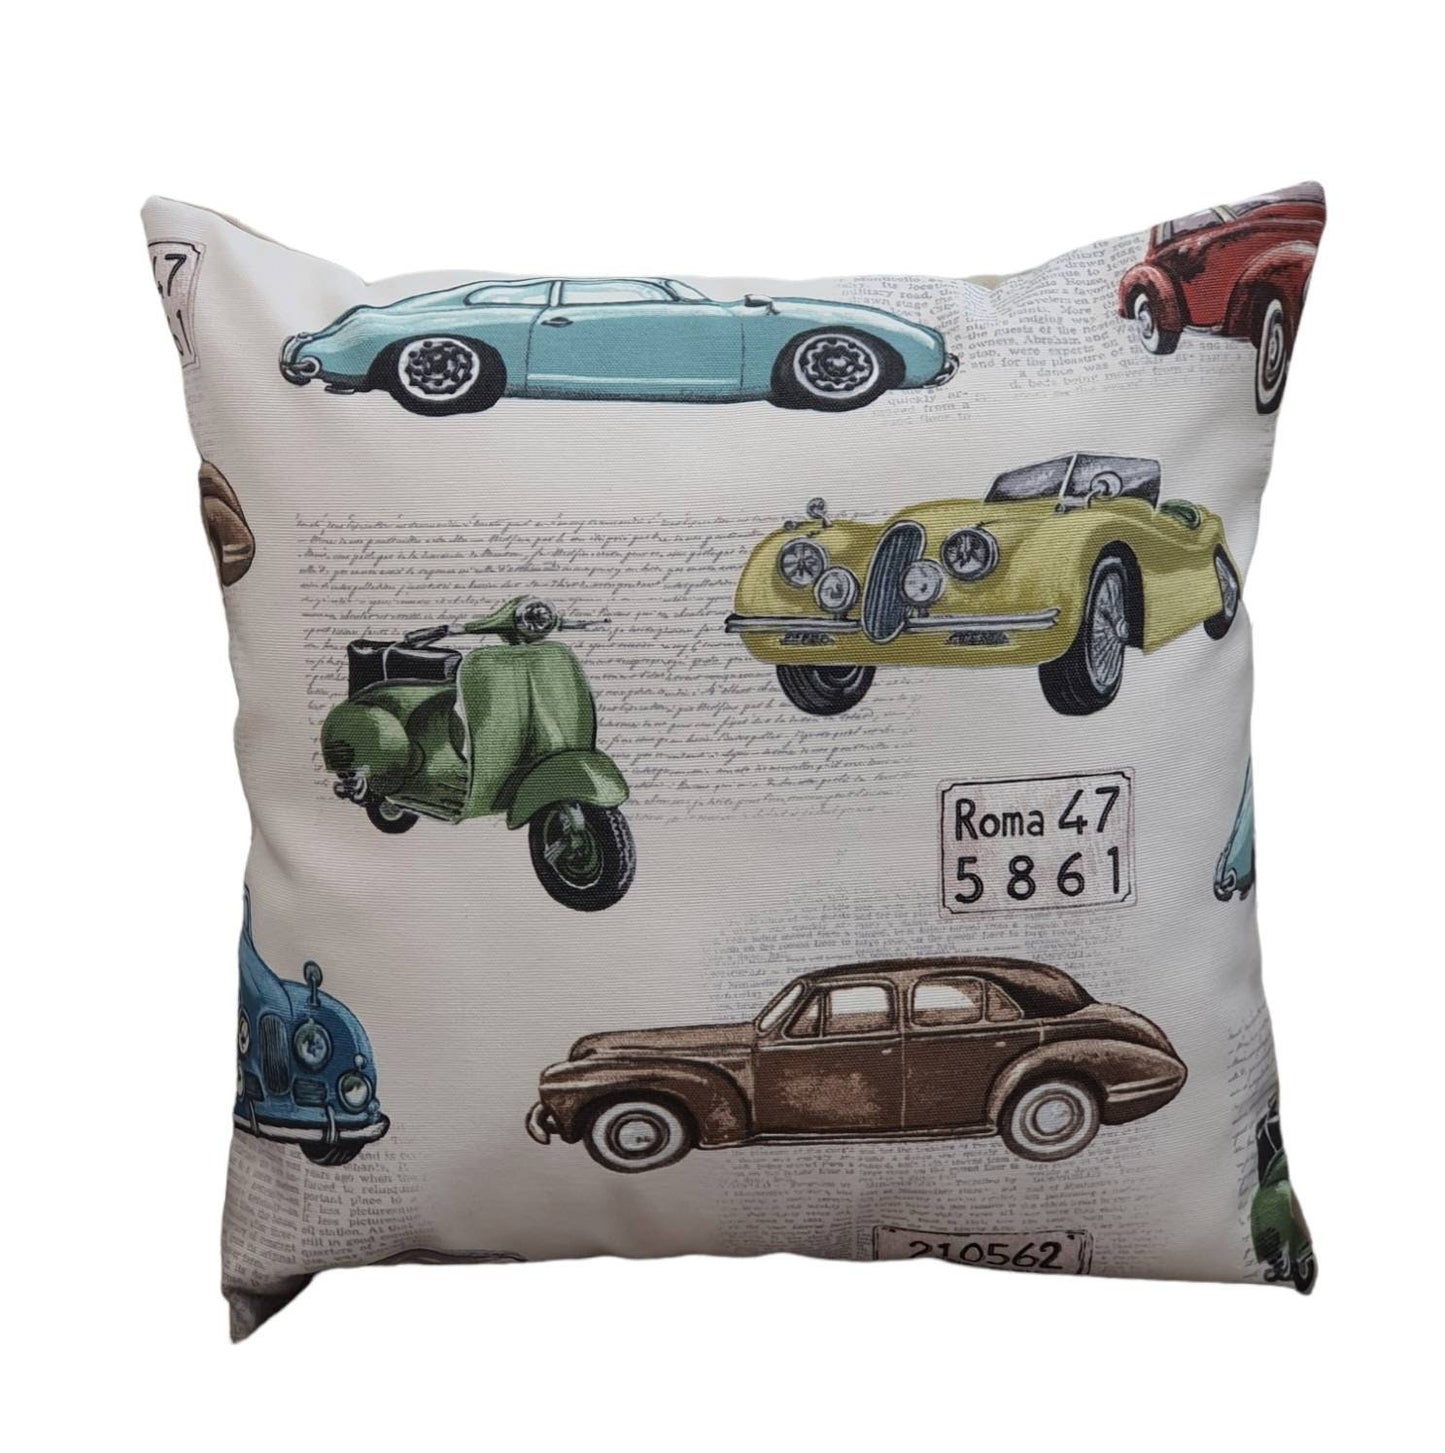 Classic Cars Lover - Handmade Cushion Cover (18x18)